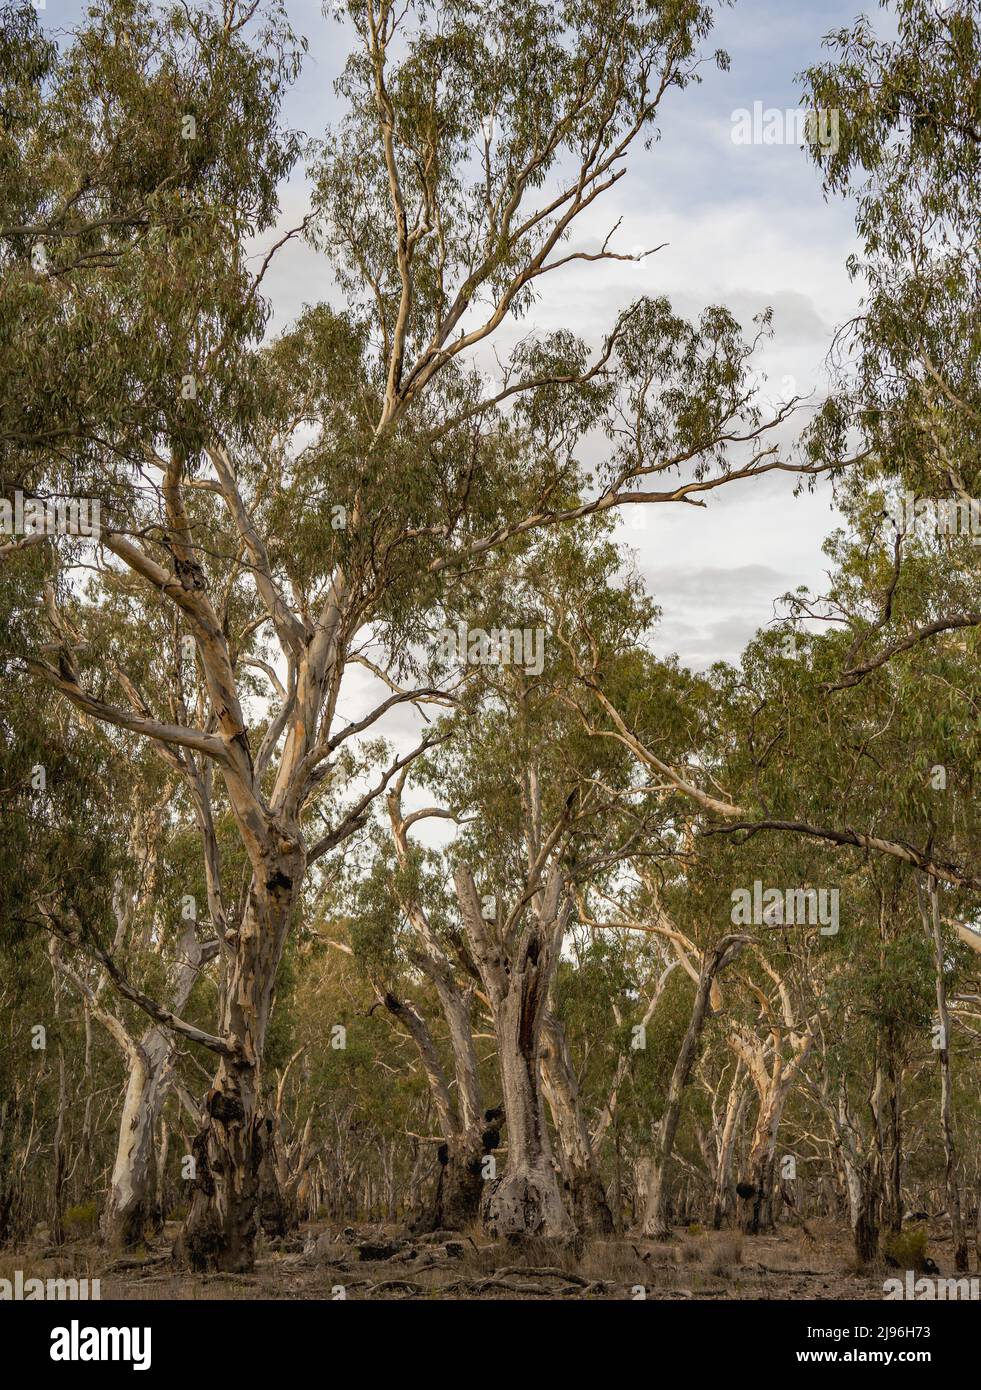 A stand of tall Australian River Red Gum (Eucalyptus camaldulensis) trees at Reedy Lake, Bailieston near Nagambie, Victoria, Australia Stock Photo